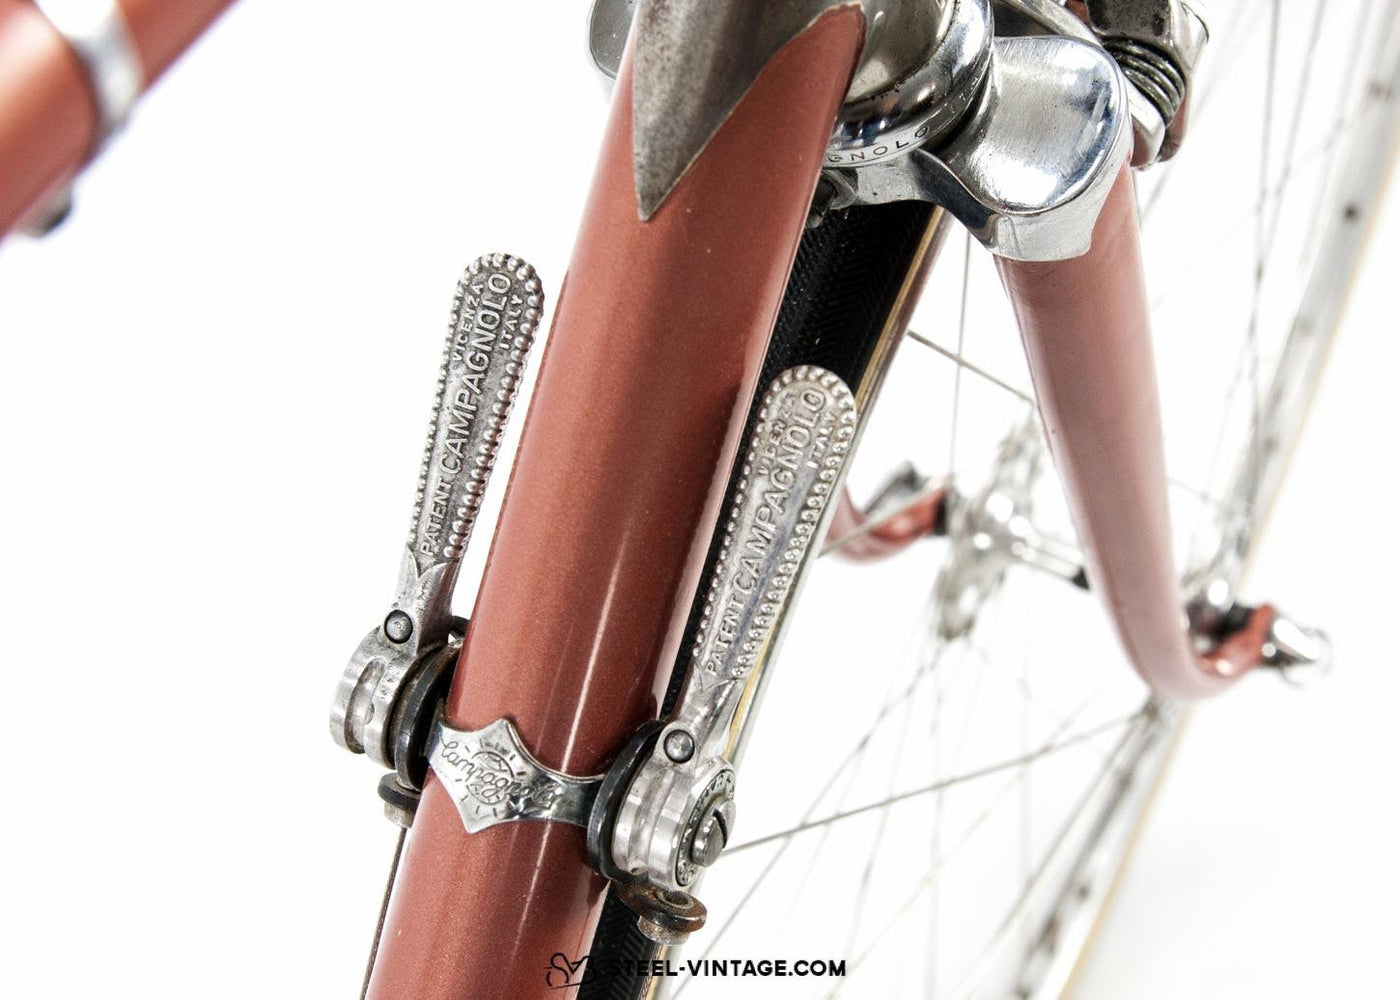 Cinelli Modello B Classic Road Bike 1960s - Steel Vintage Bikes